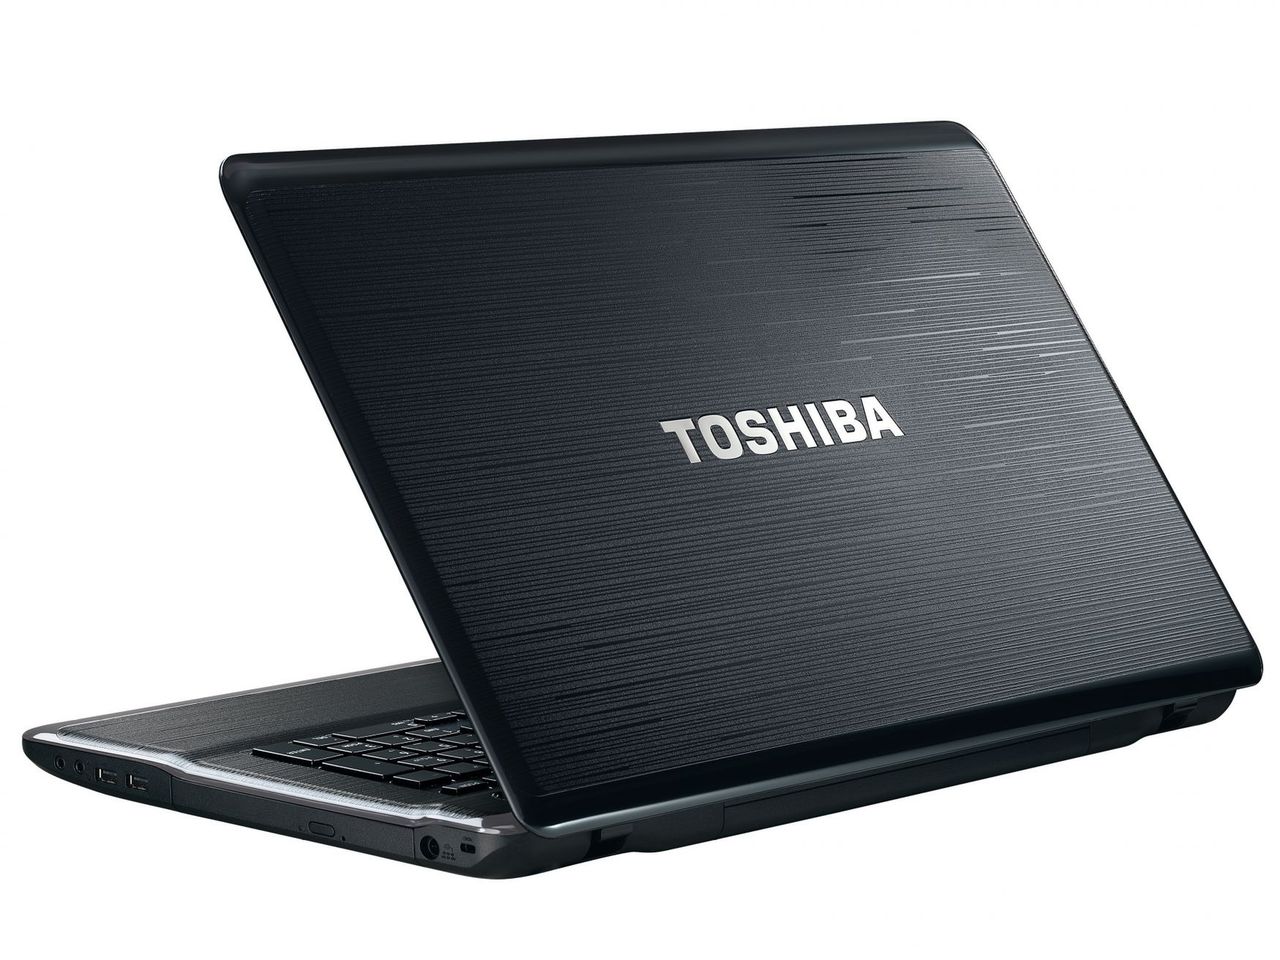 Toshiba Satellite P770 (fot. notebookinfo.de)